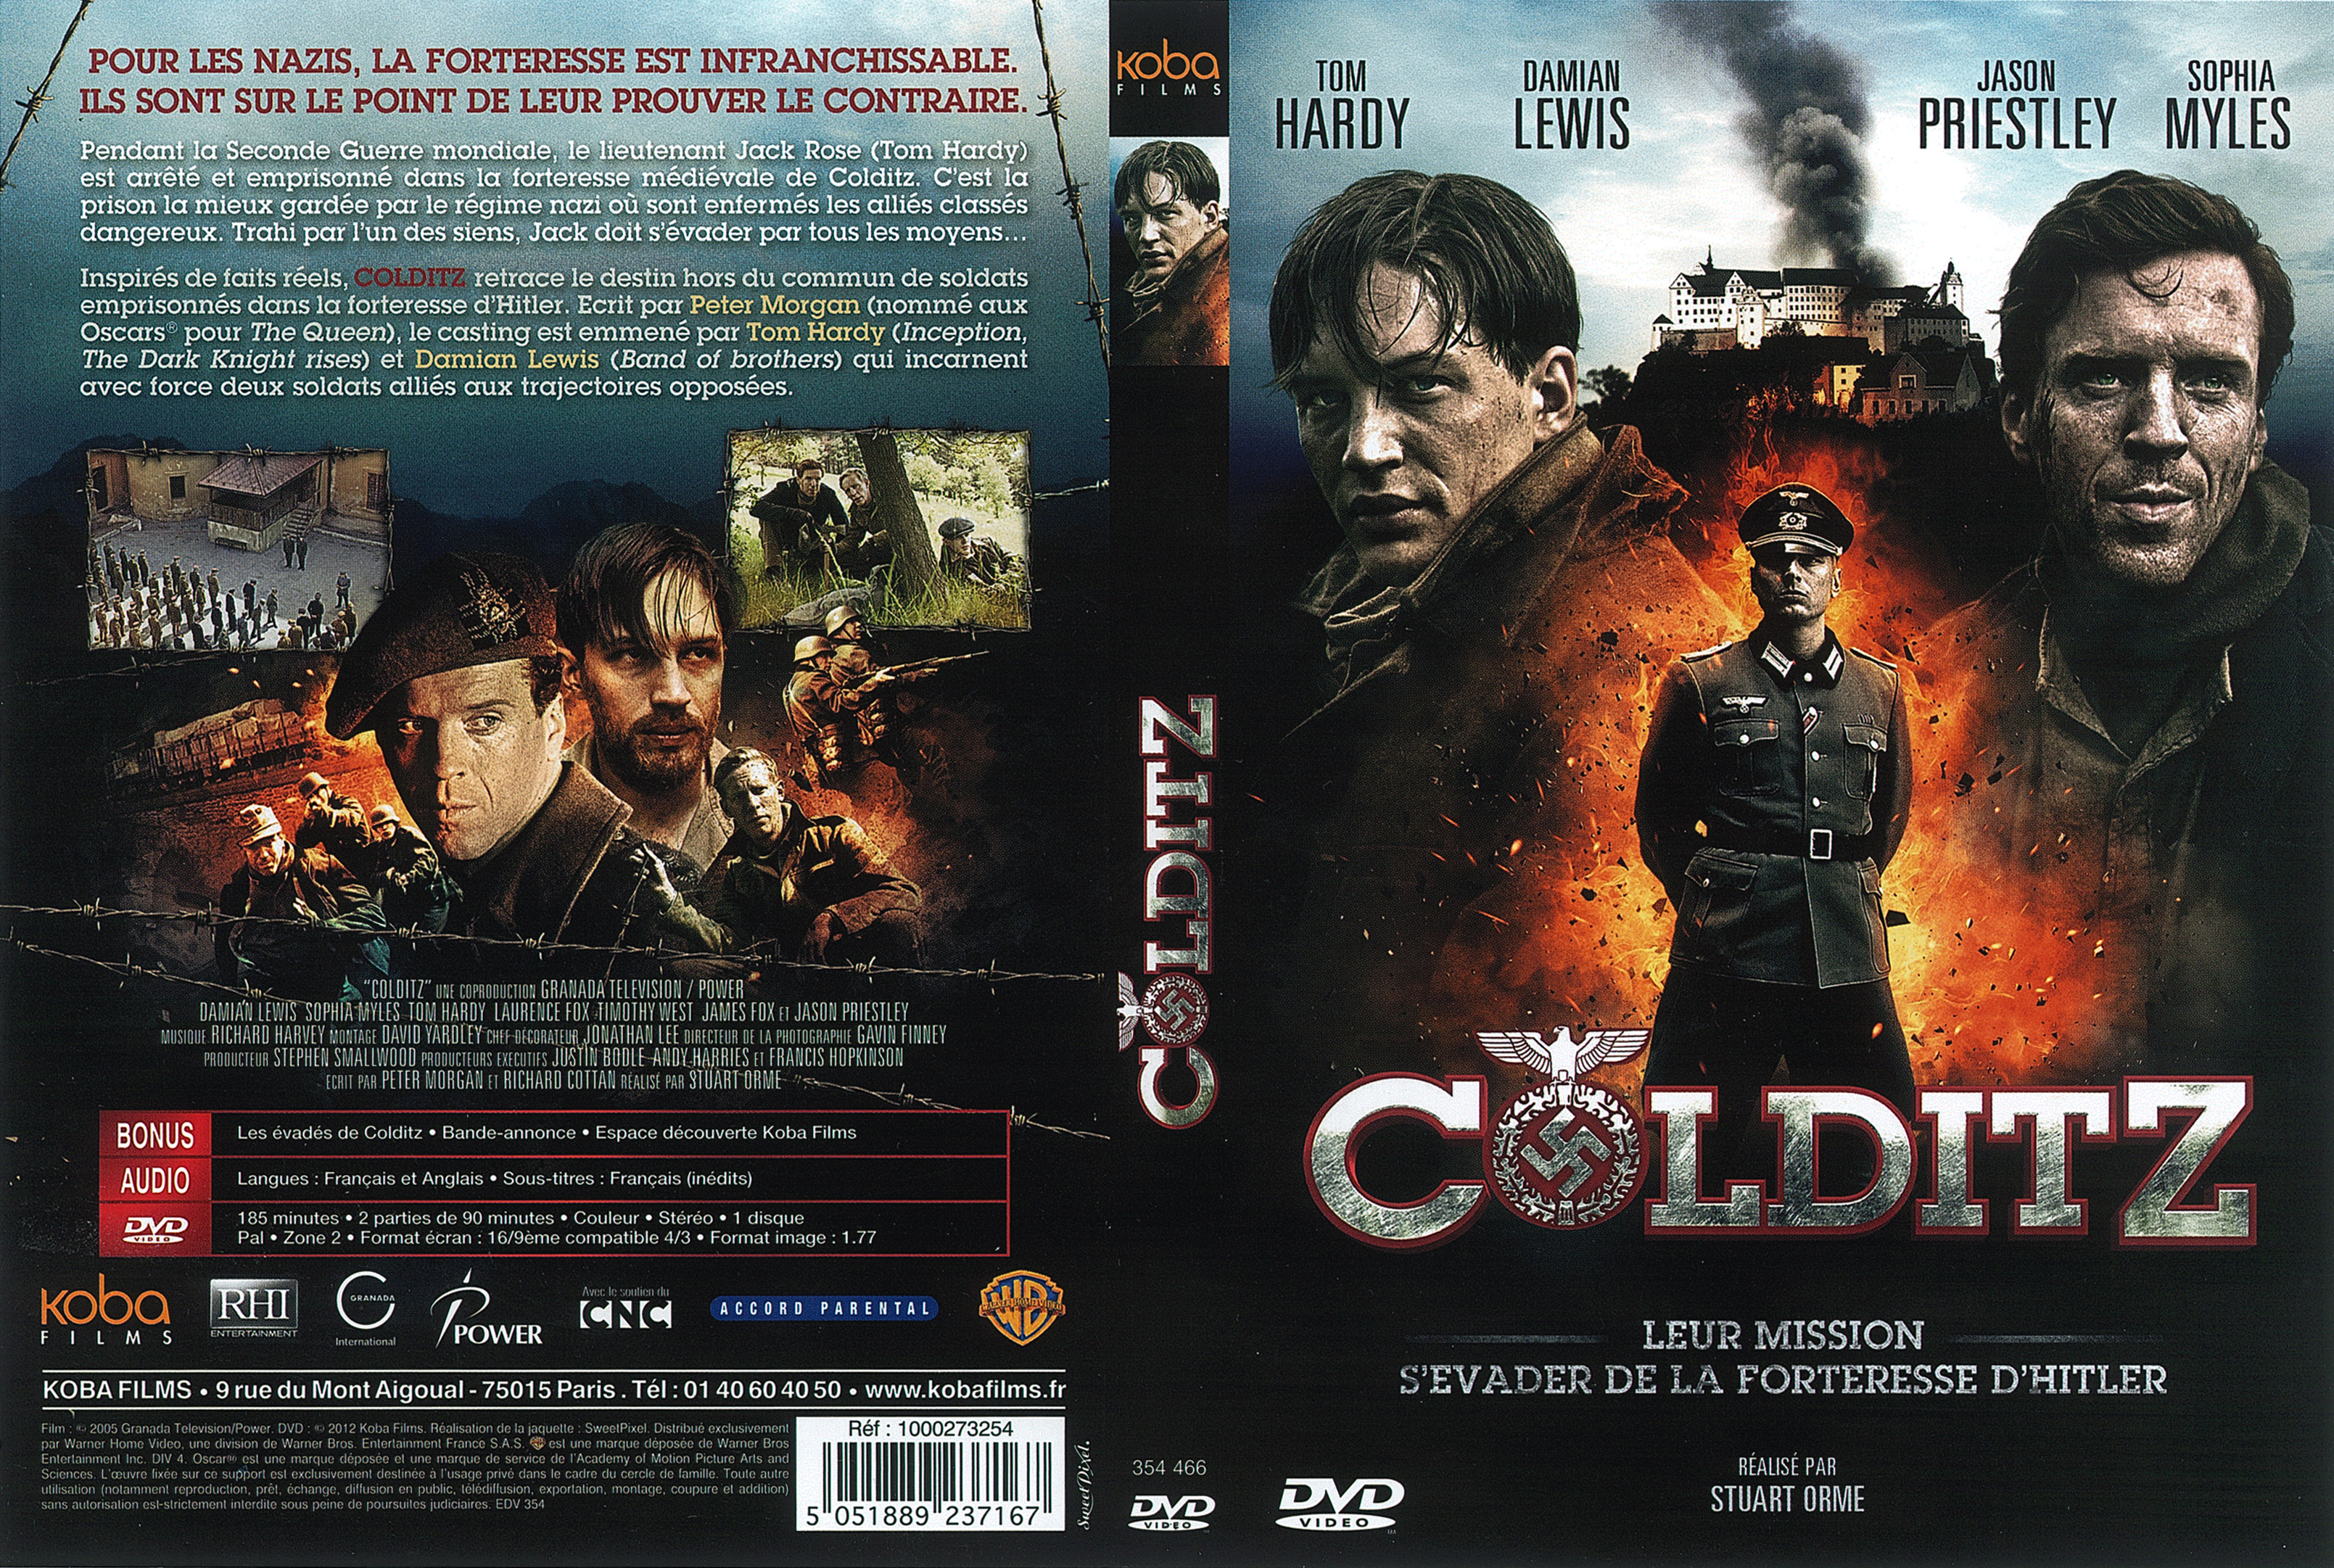 Jaquette DVD Colditz v2